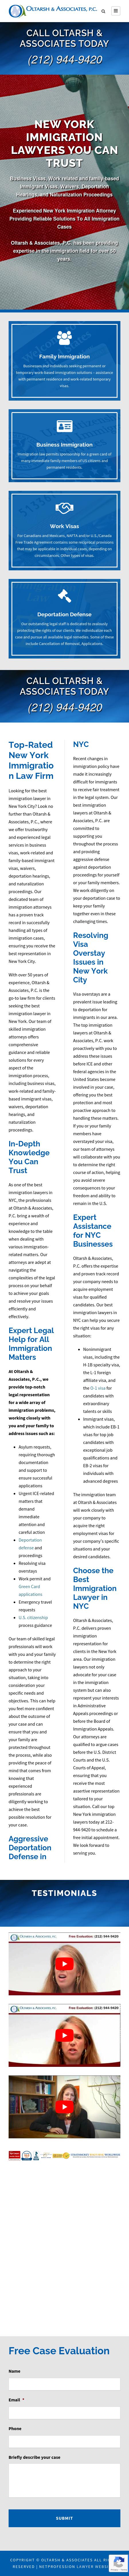 Oltarsh & Associates, P.C. - New York NY Lawyers